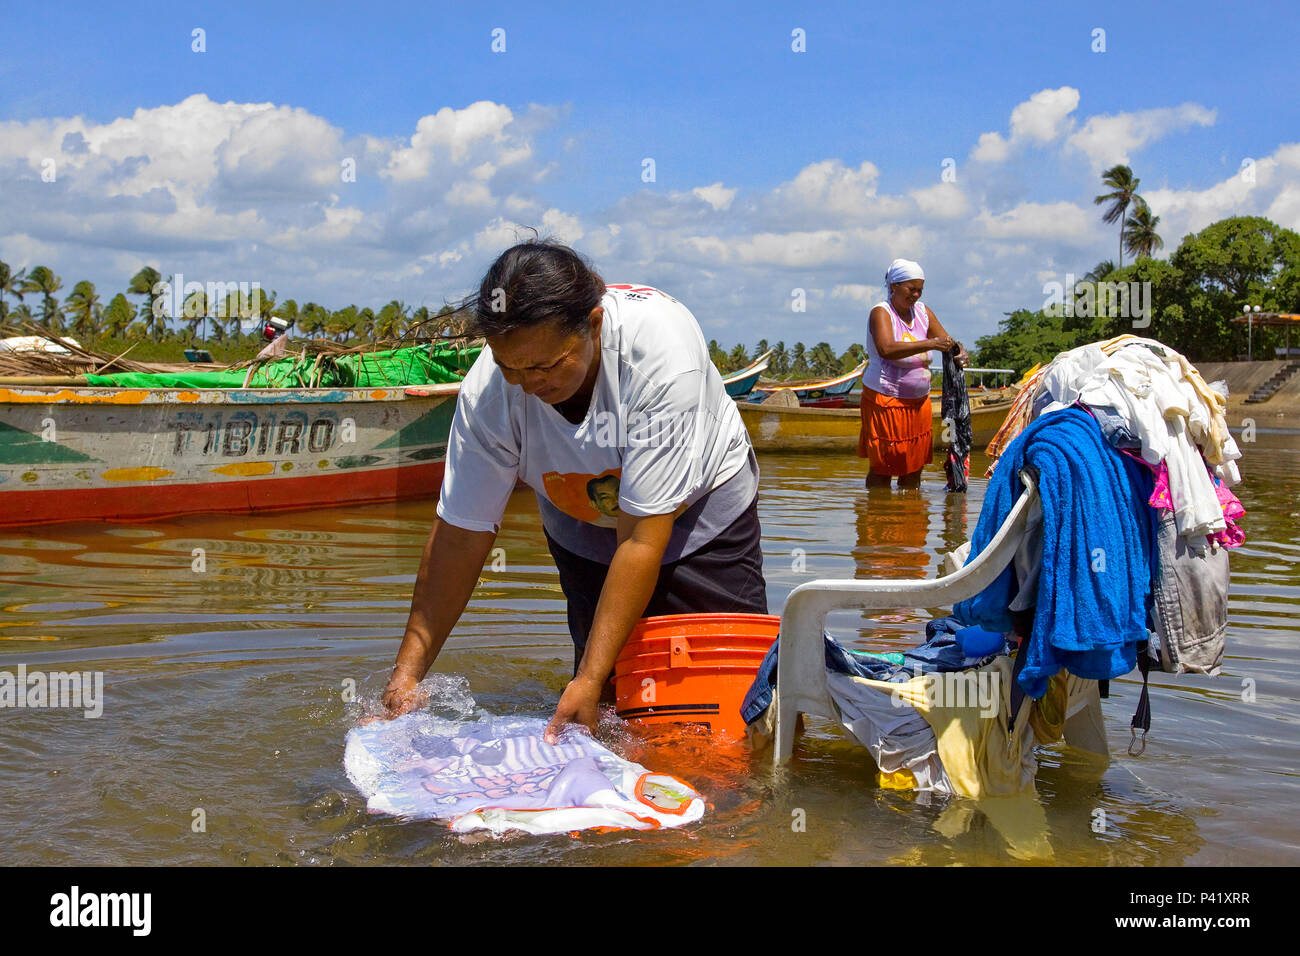 Mulheres lavando roupas no rio hi-res stock photography and images - Alamy